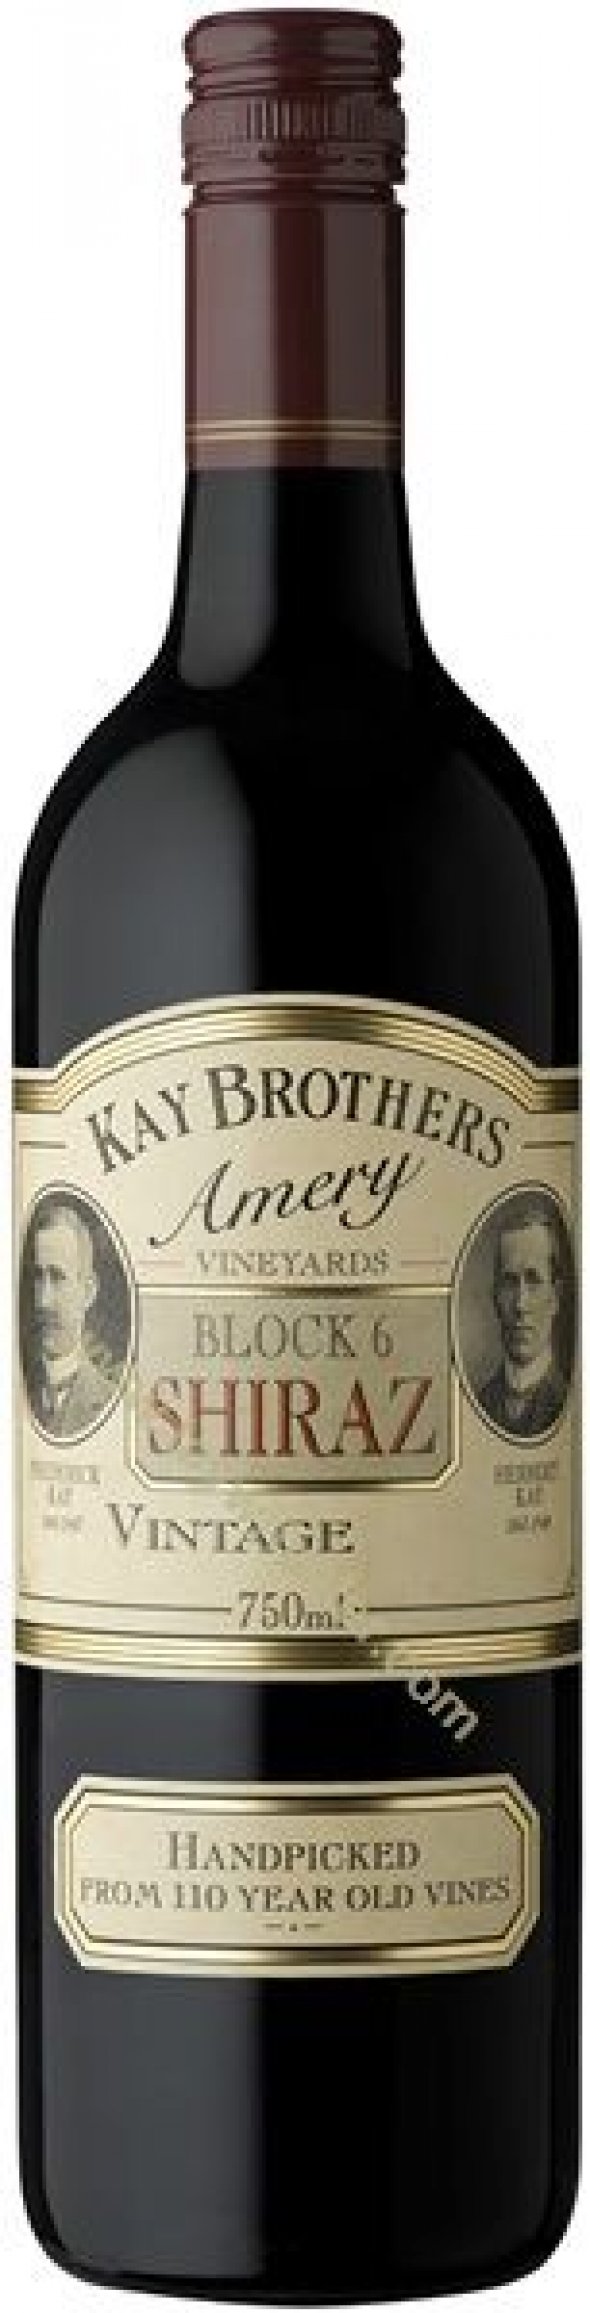 Kay Brothers, Block Six Shiraz, South Australia, McLaren Vale, Australia